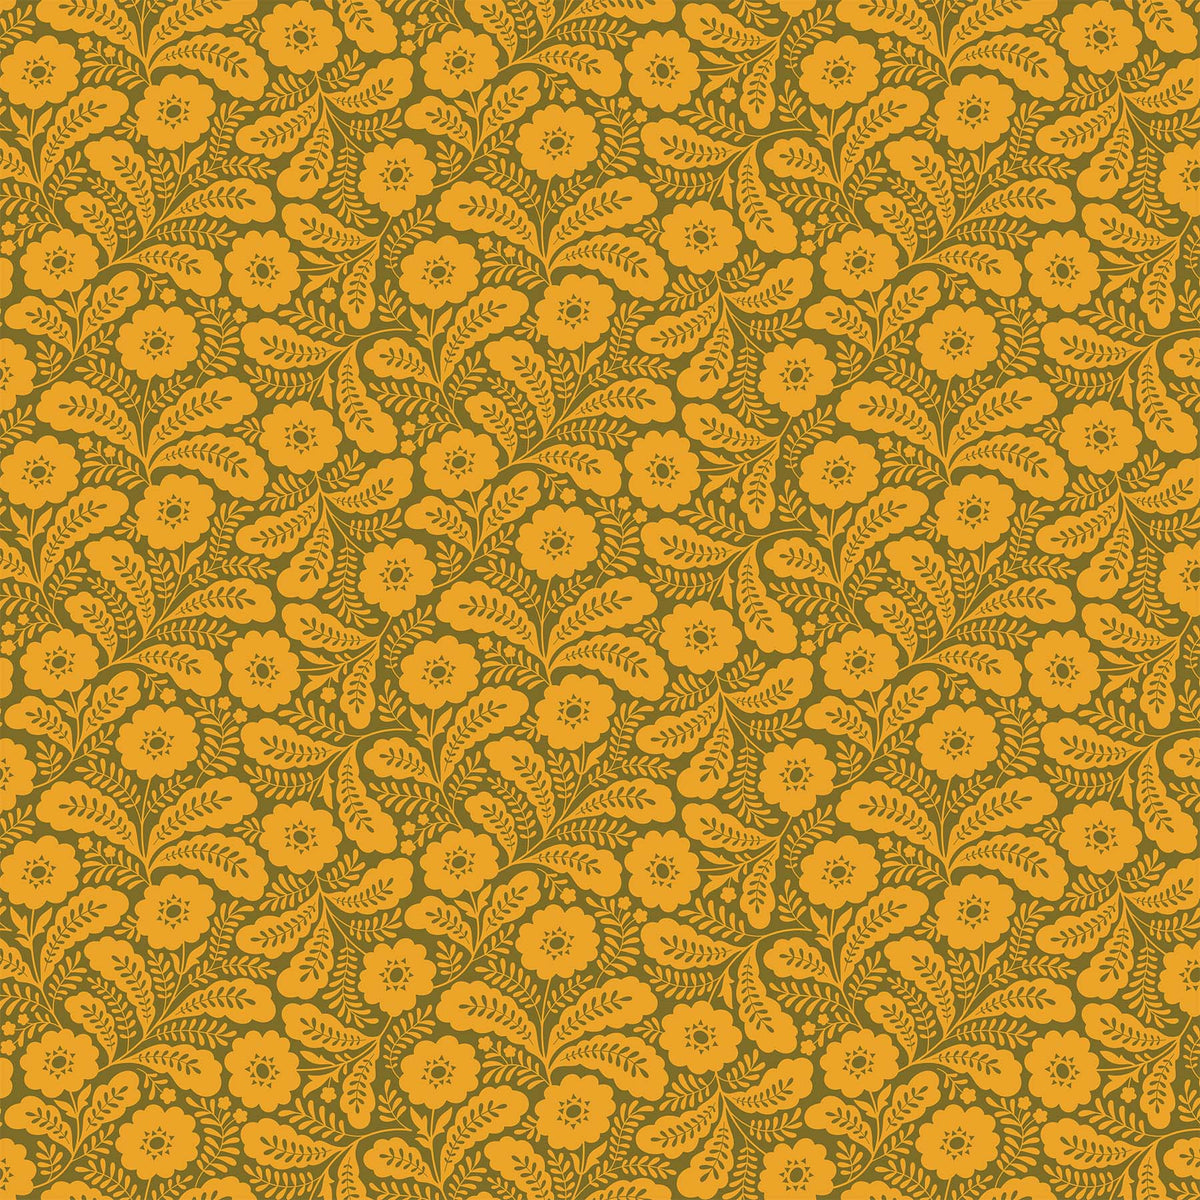 Local Honey Quilt Fabric - Primrose in Harvest Gold/Green - 90660-55